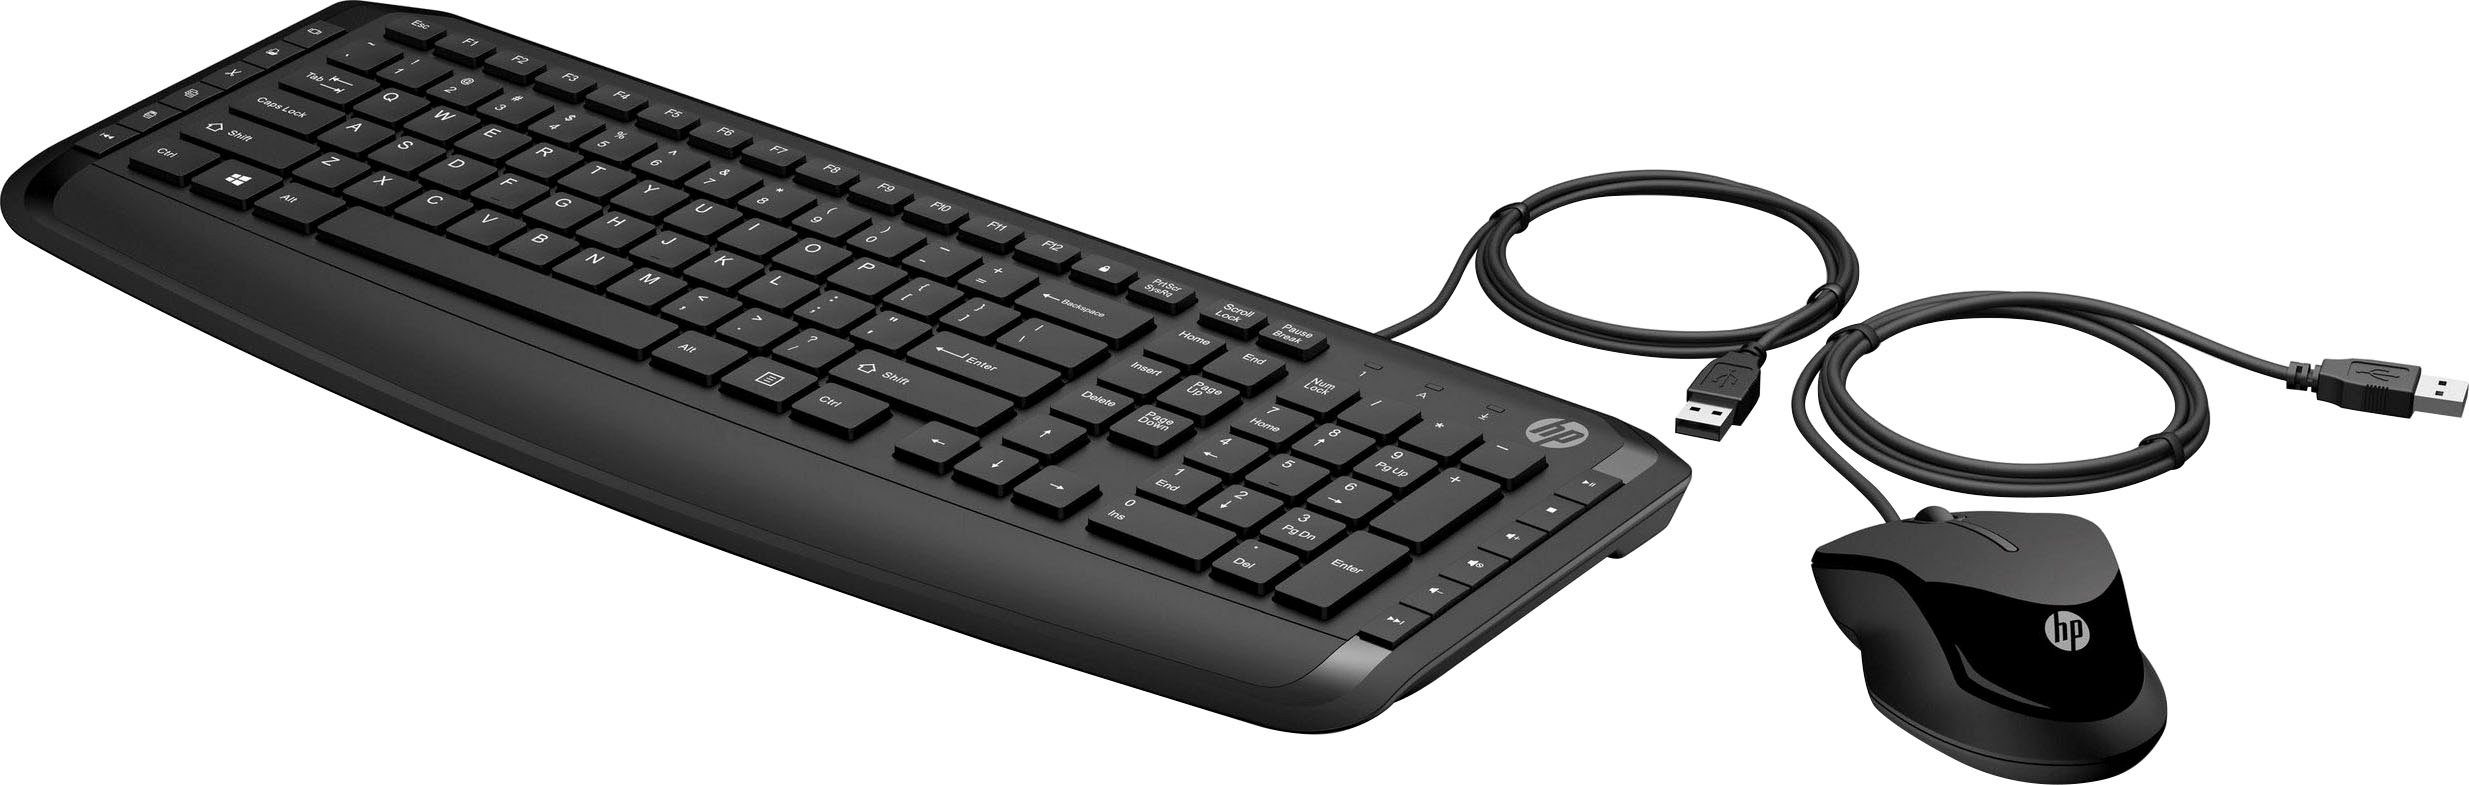 HP 200 und Pavillon Maus-Set Tastatur-